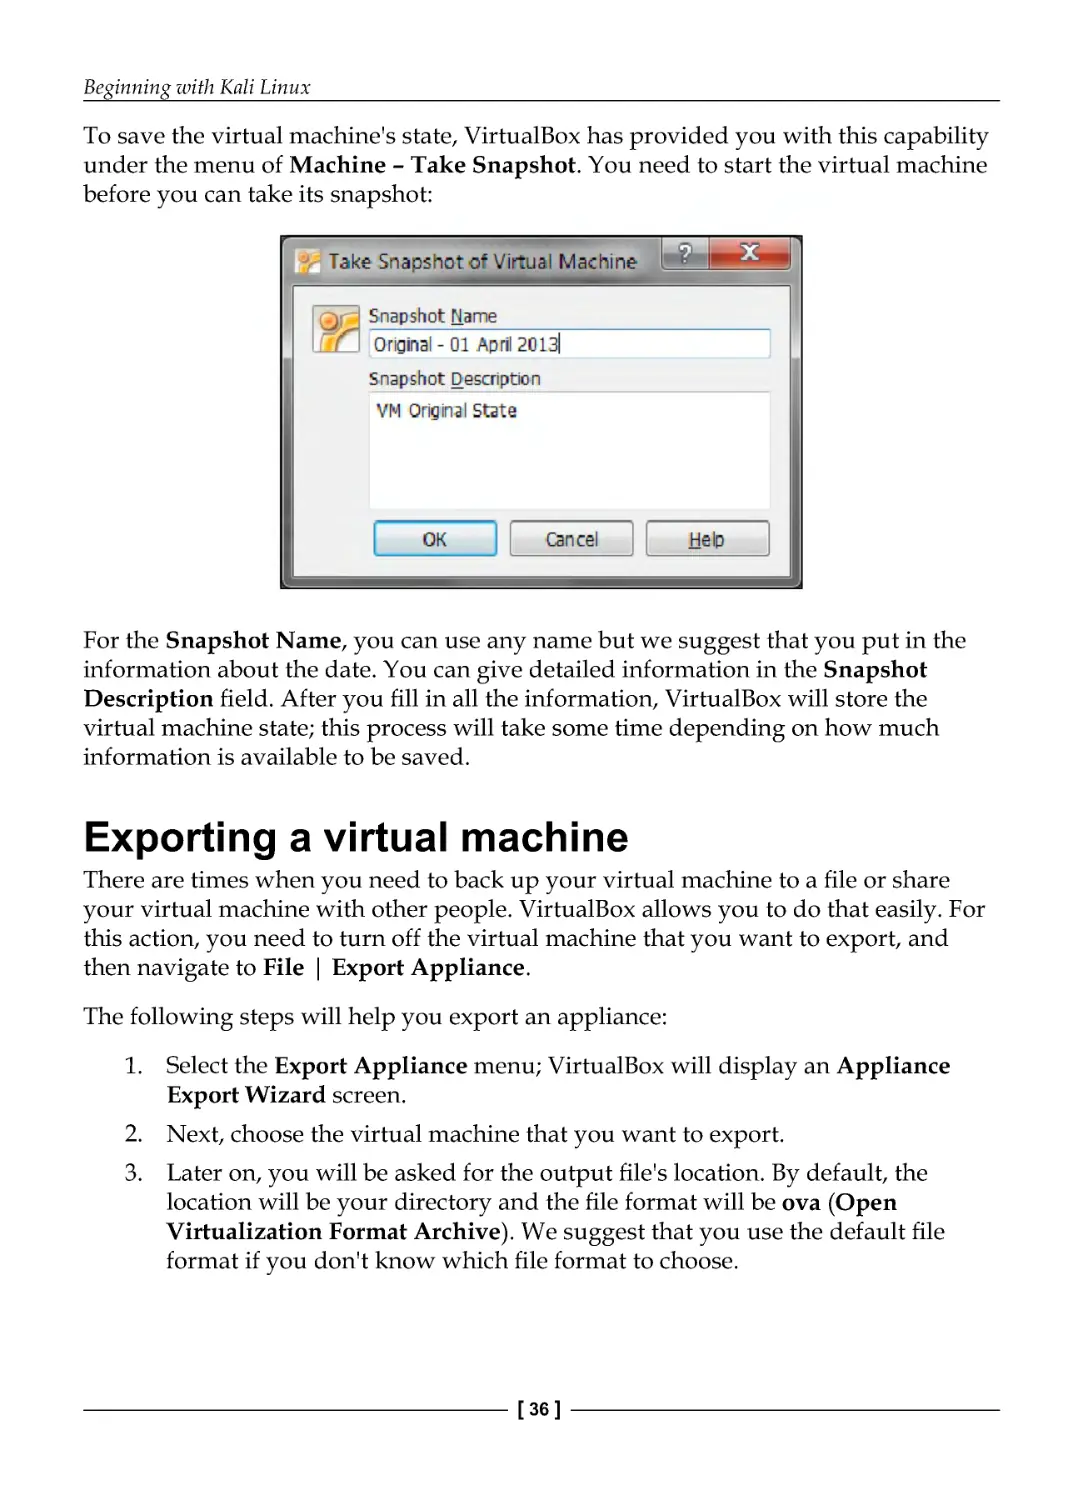 Exporting a virtual machine